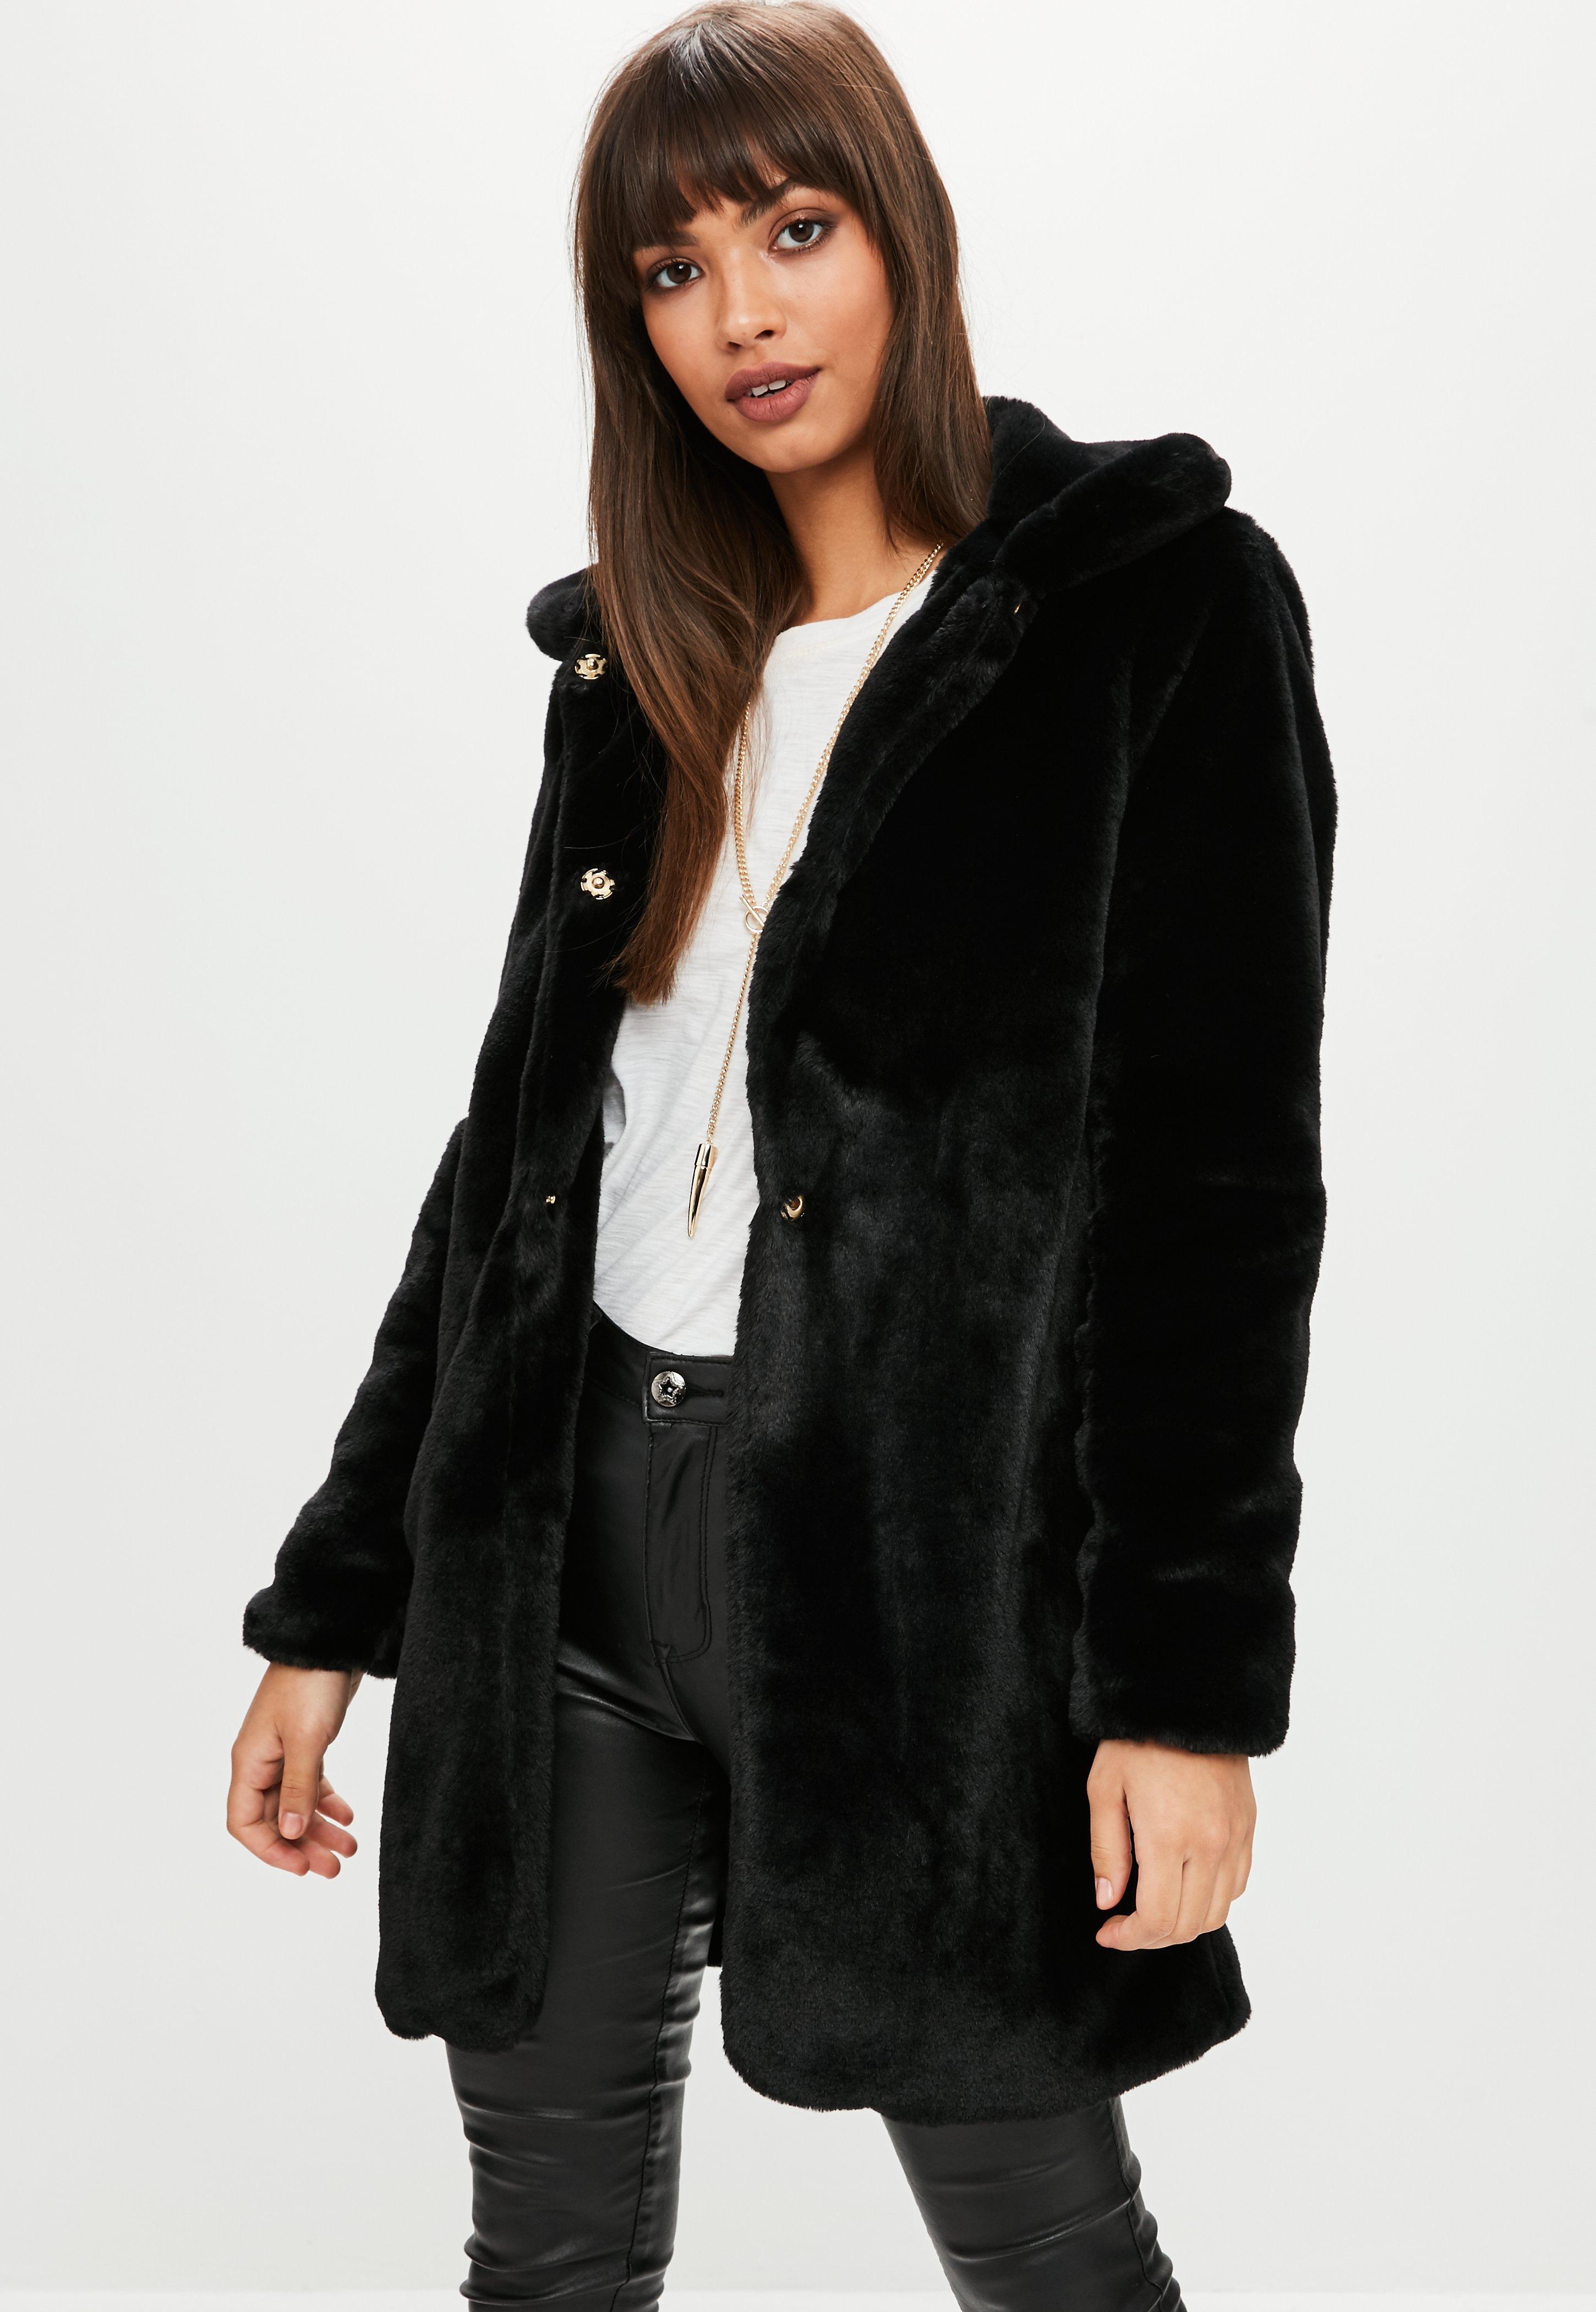 Missguided Black Faux Fur Coat in Black - Lyst